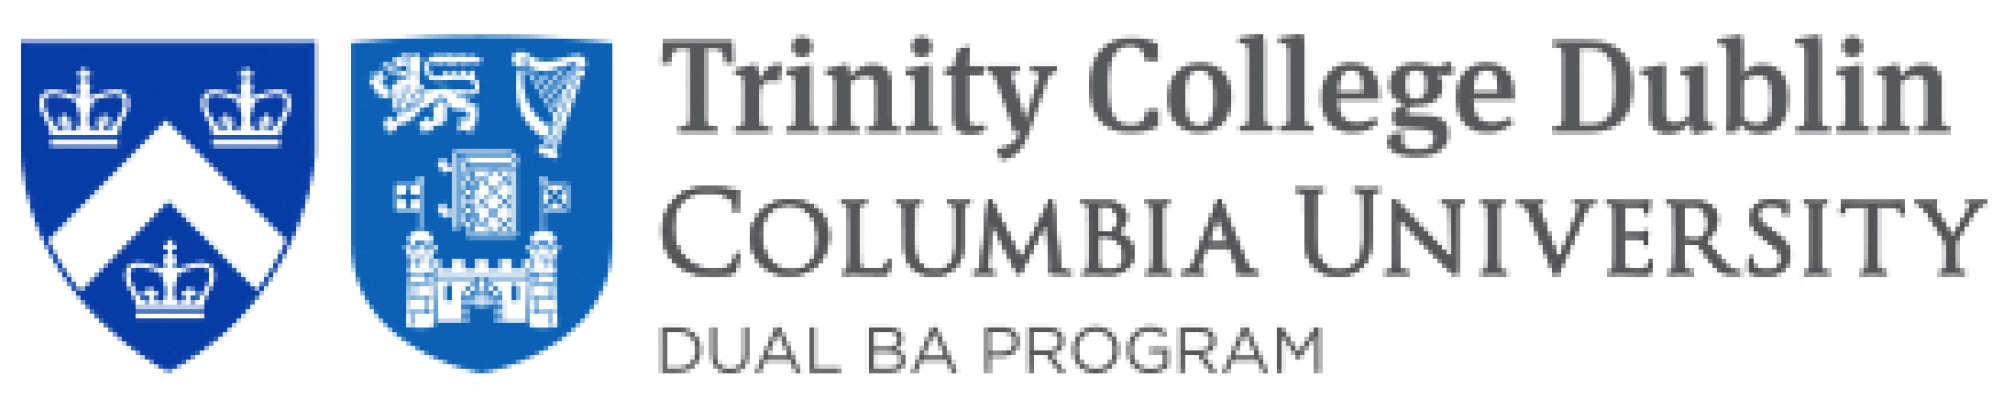 Trinity College Dublin Logo - Columbia University School of General Studies | Trinity College Dublin